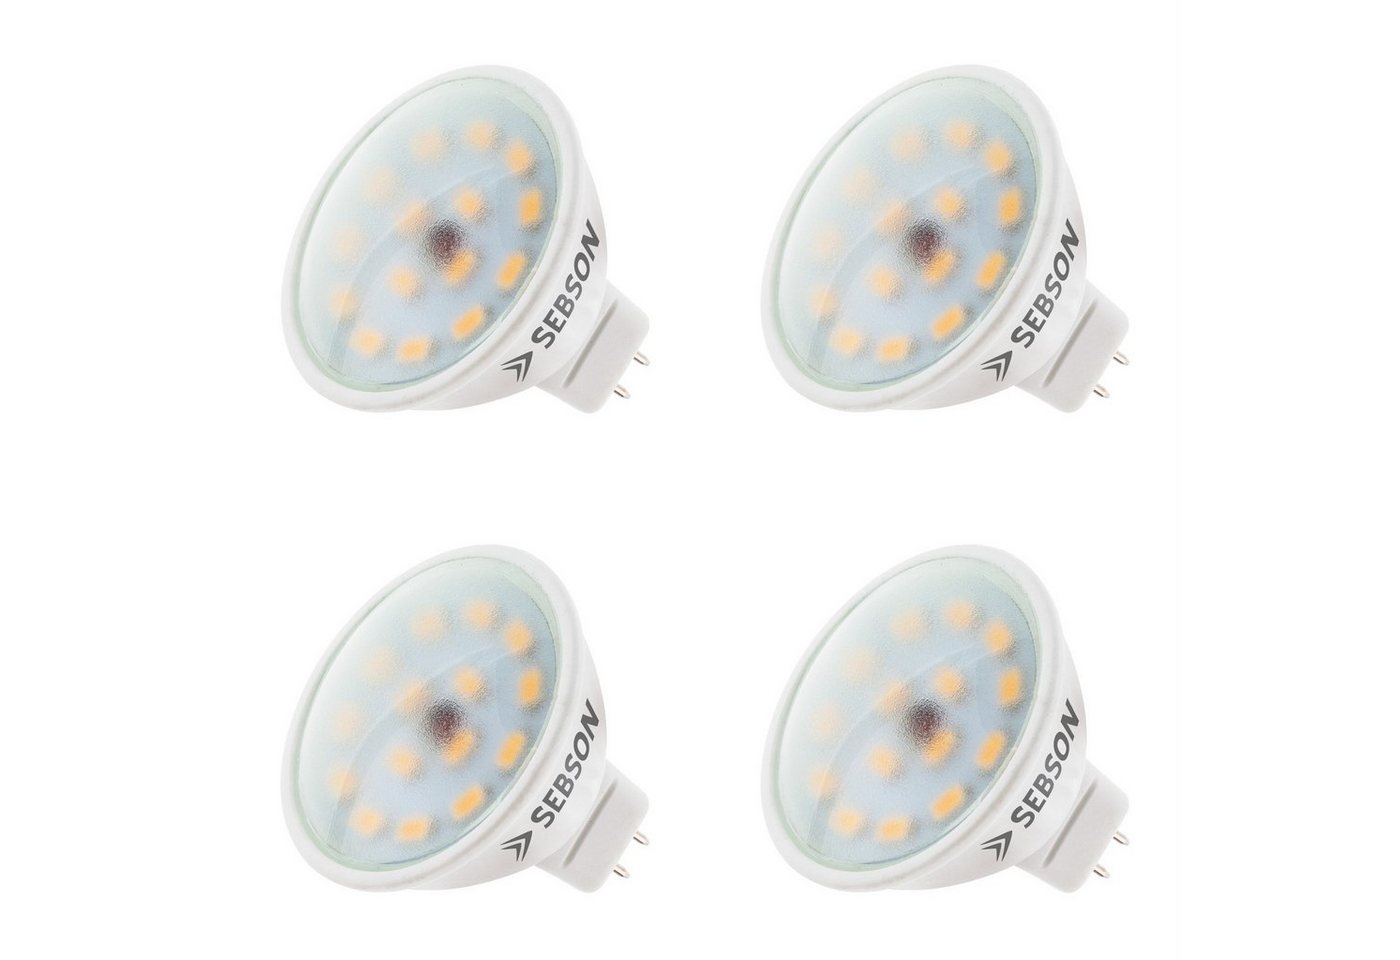 SEBSON LED-Leuchtmittel LED Lampe GU5.3 / MR16 warmweiß 5W 12V DC Leuchtmittel - 4er Pack von SEBSON